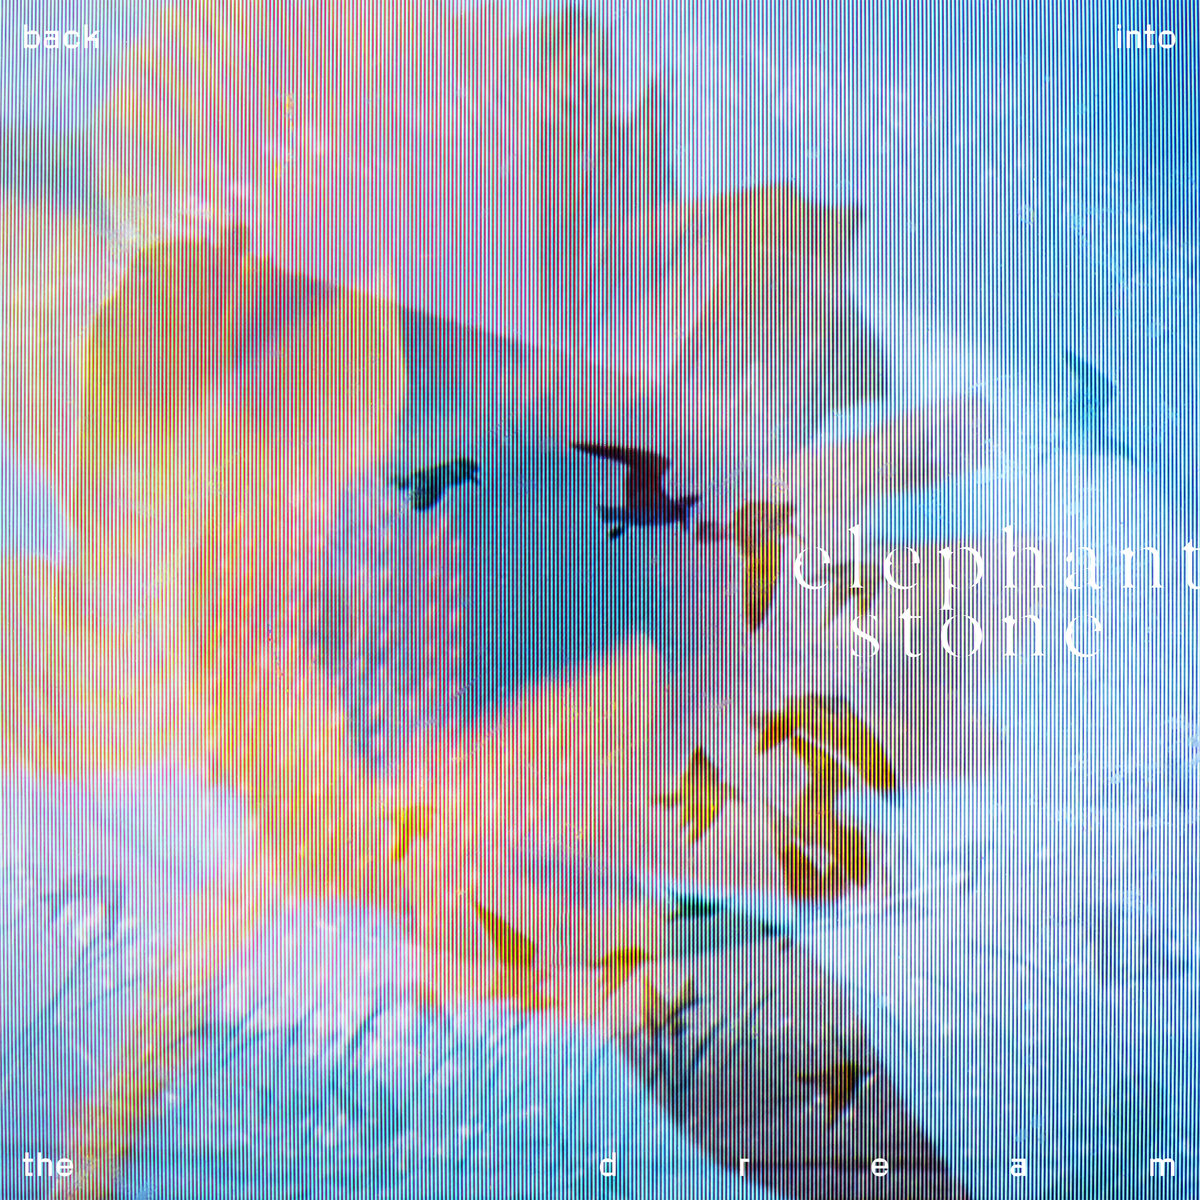 Elephant Stone – Back Into The Dream